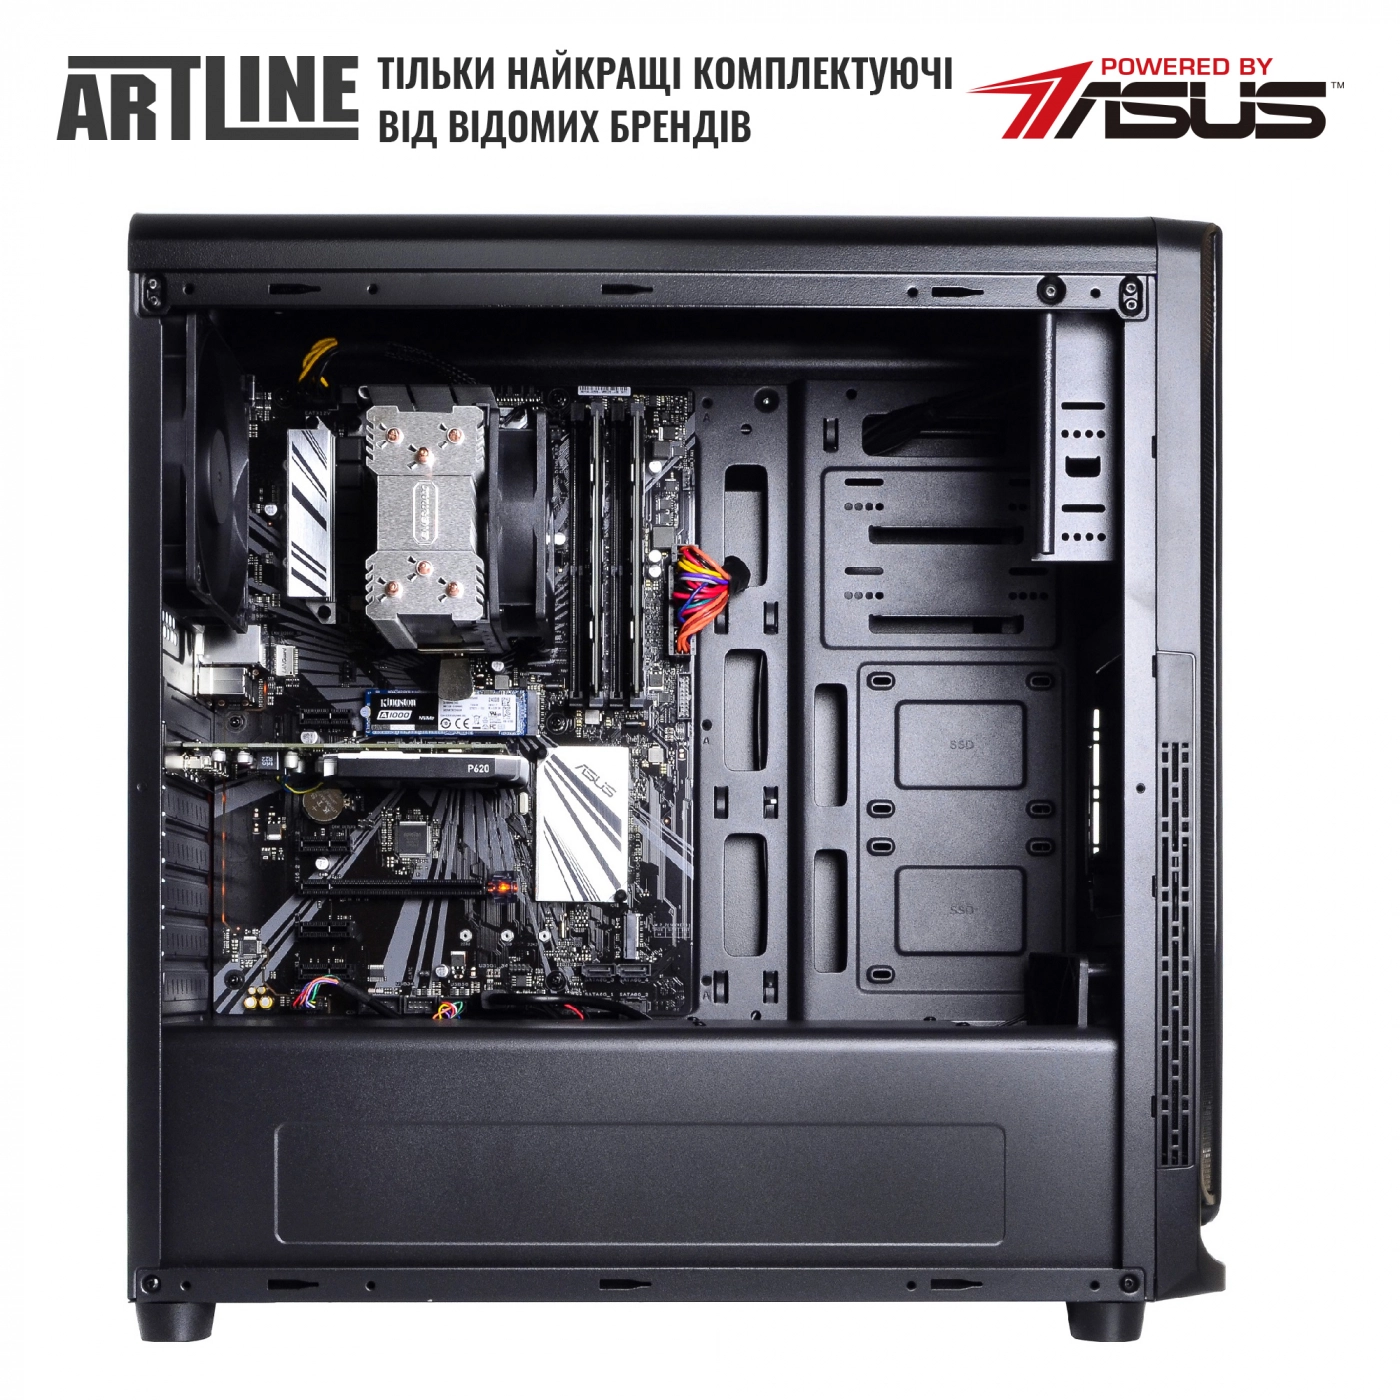 Купити Сервер ARTLINE Business T63v08 - фото 5